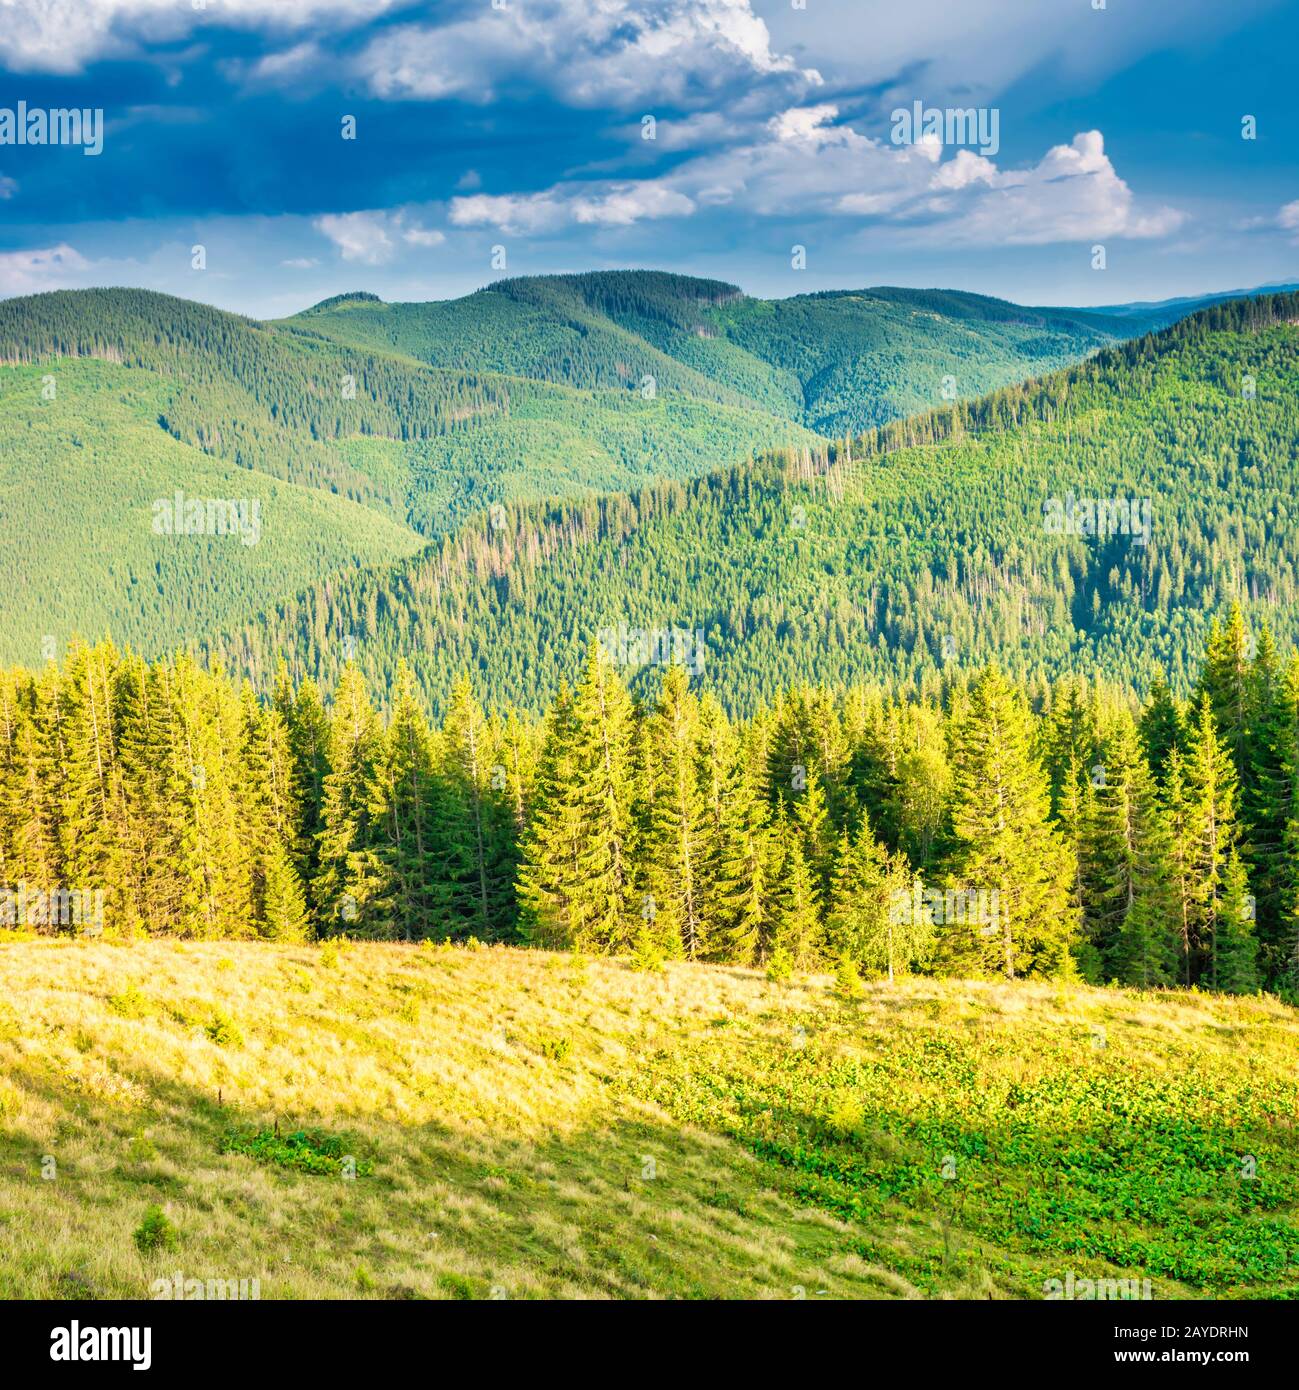 Verdi montagne con pineta Foto Stock